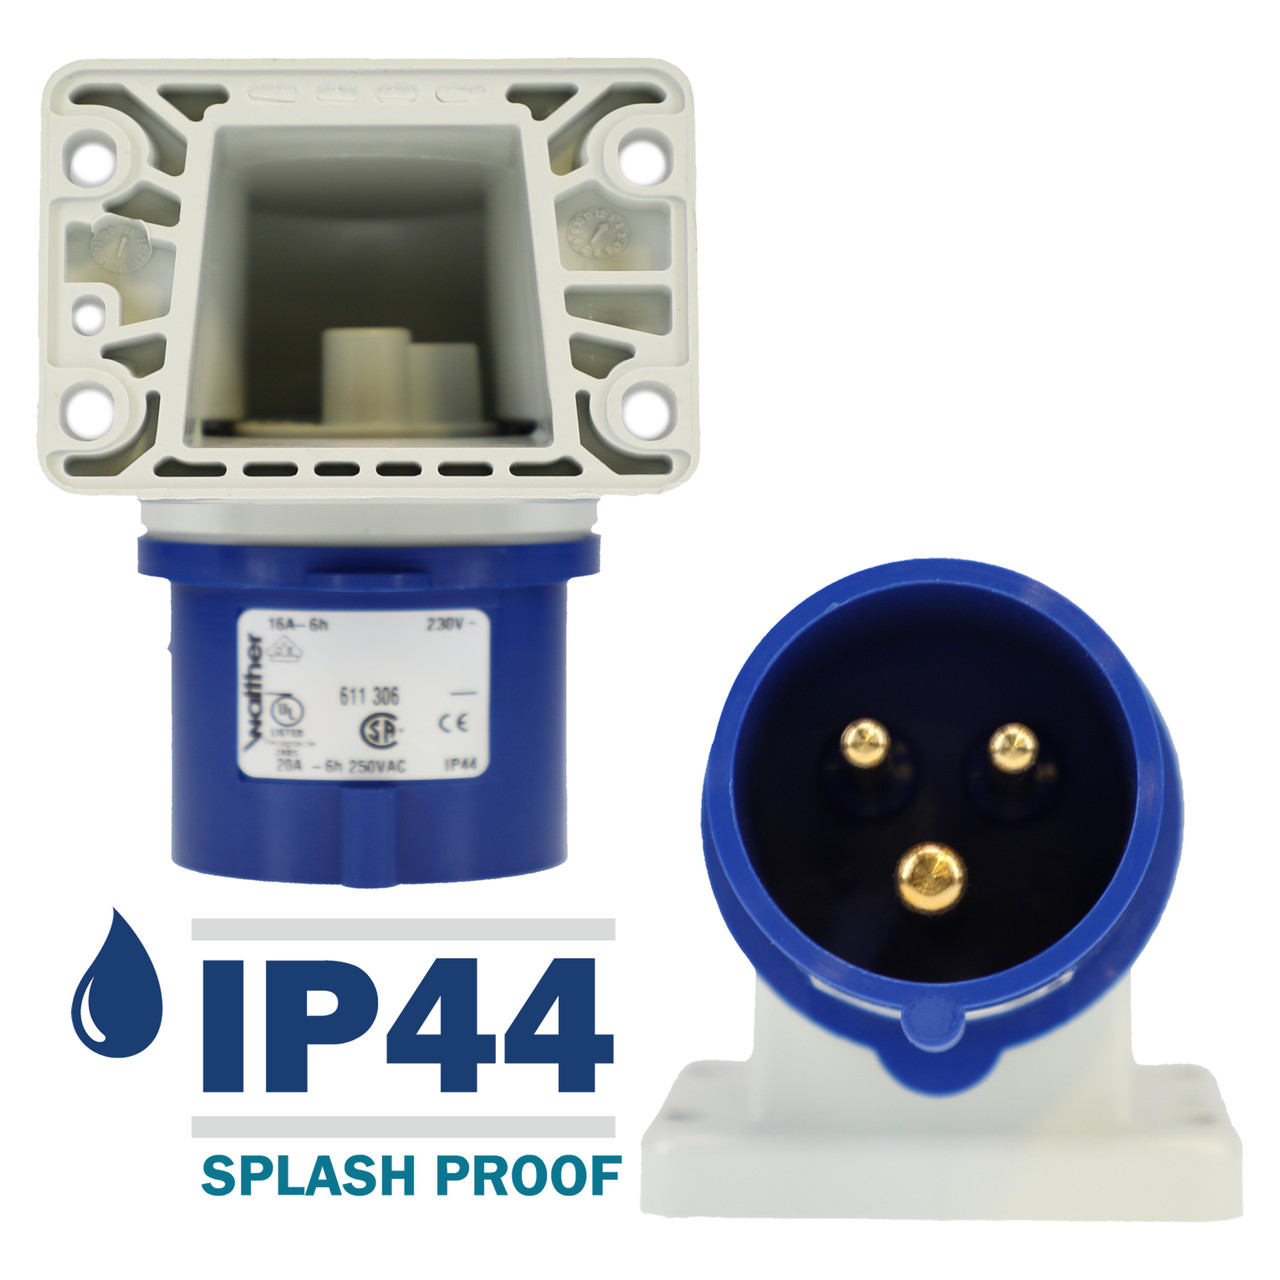 611306 inlet carries an environmental rating of IP44 Splashproof